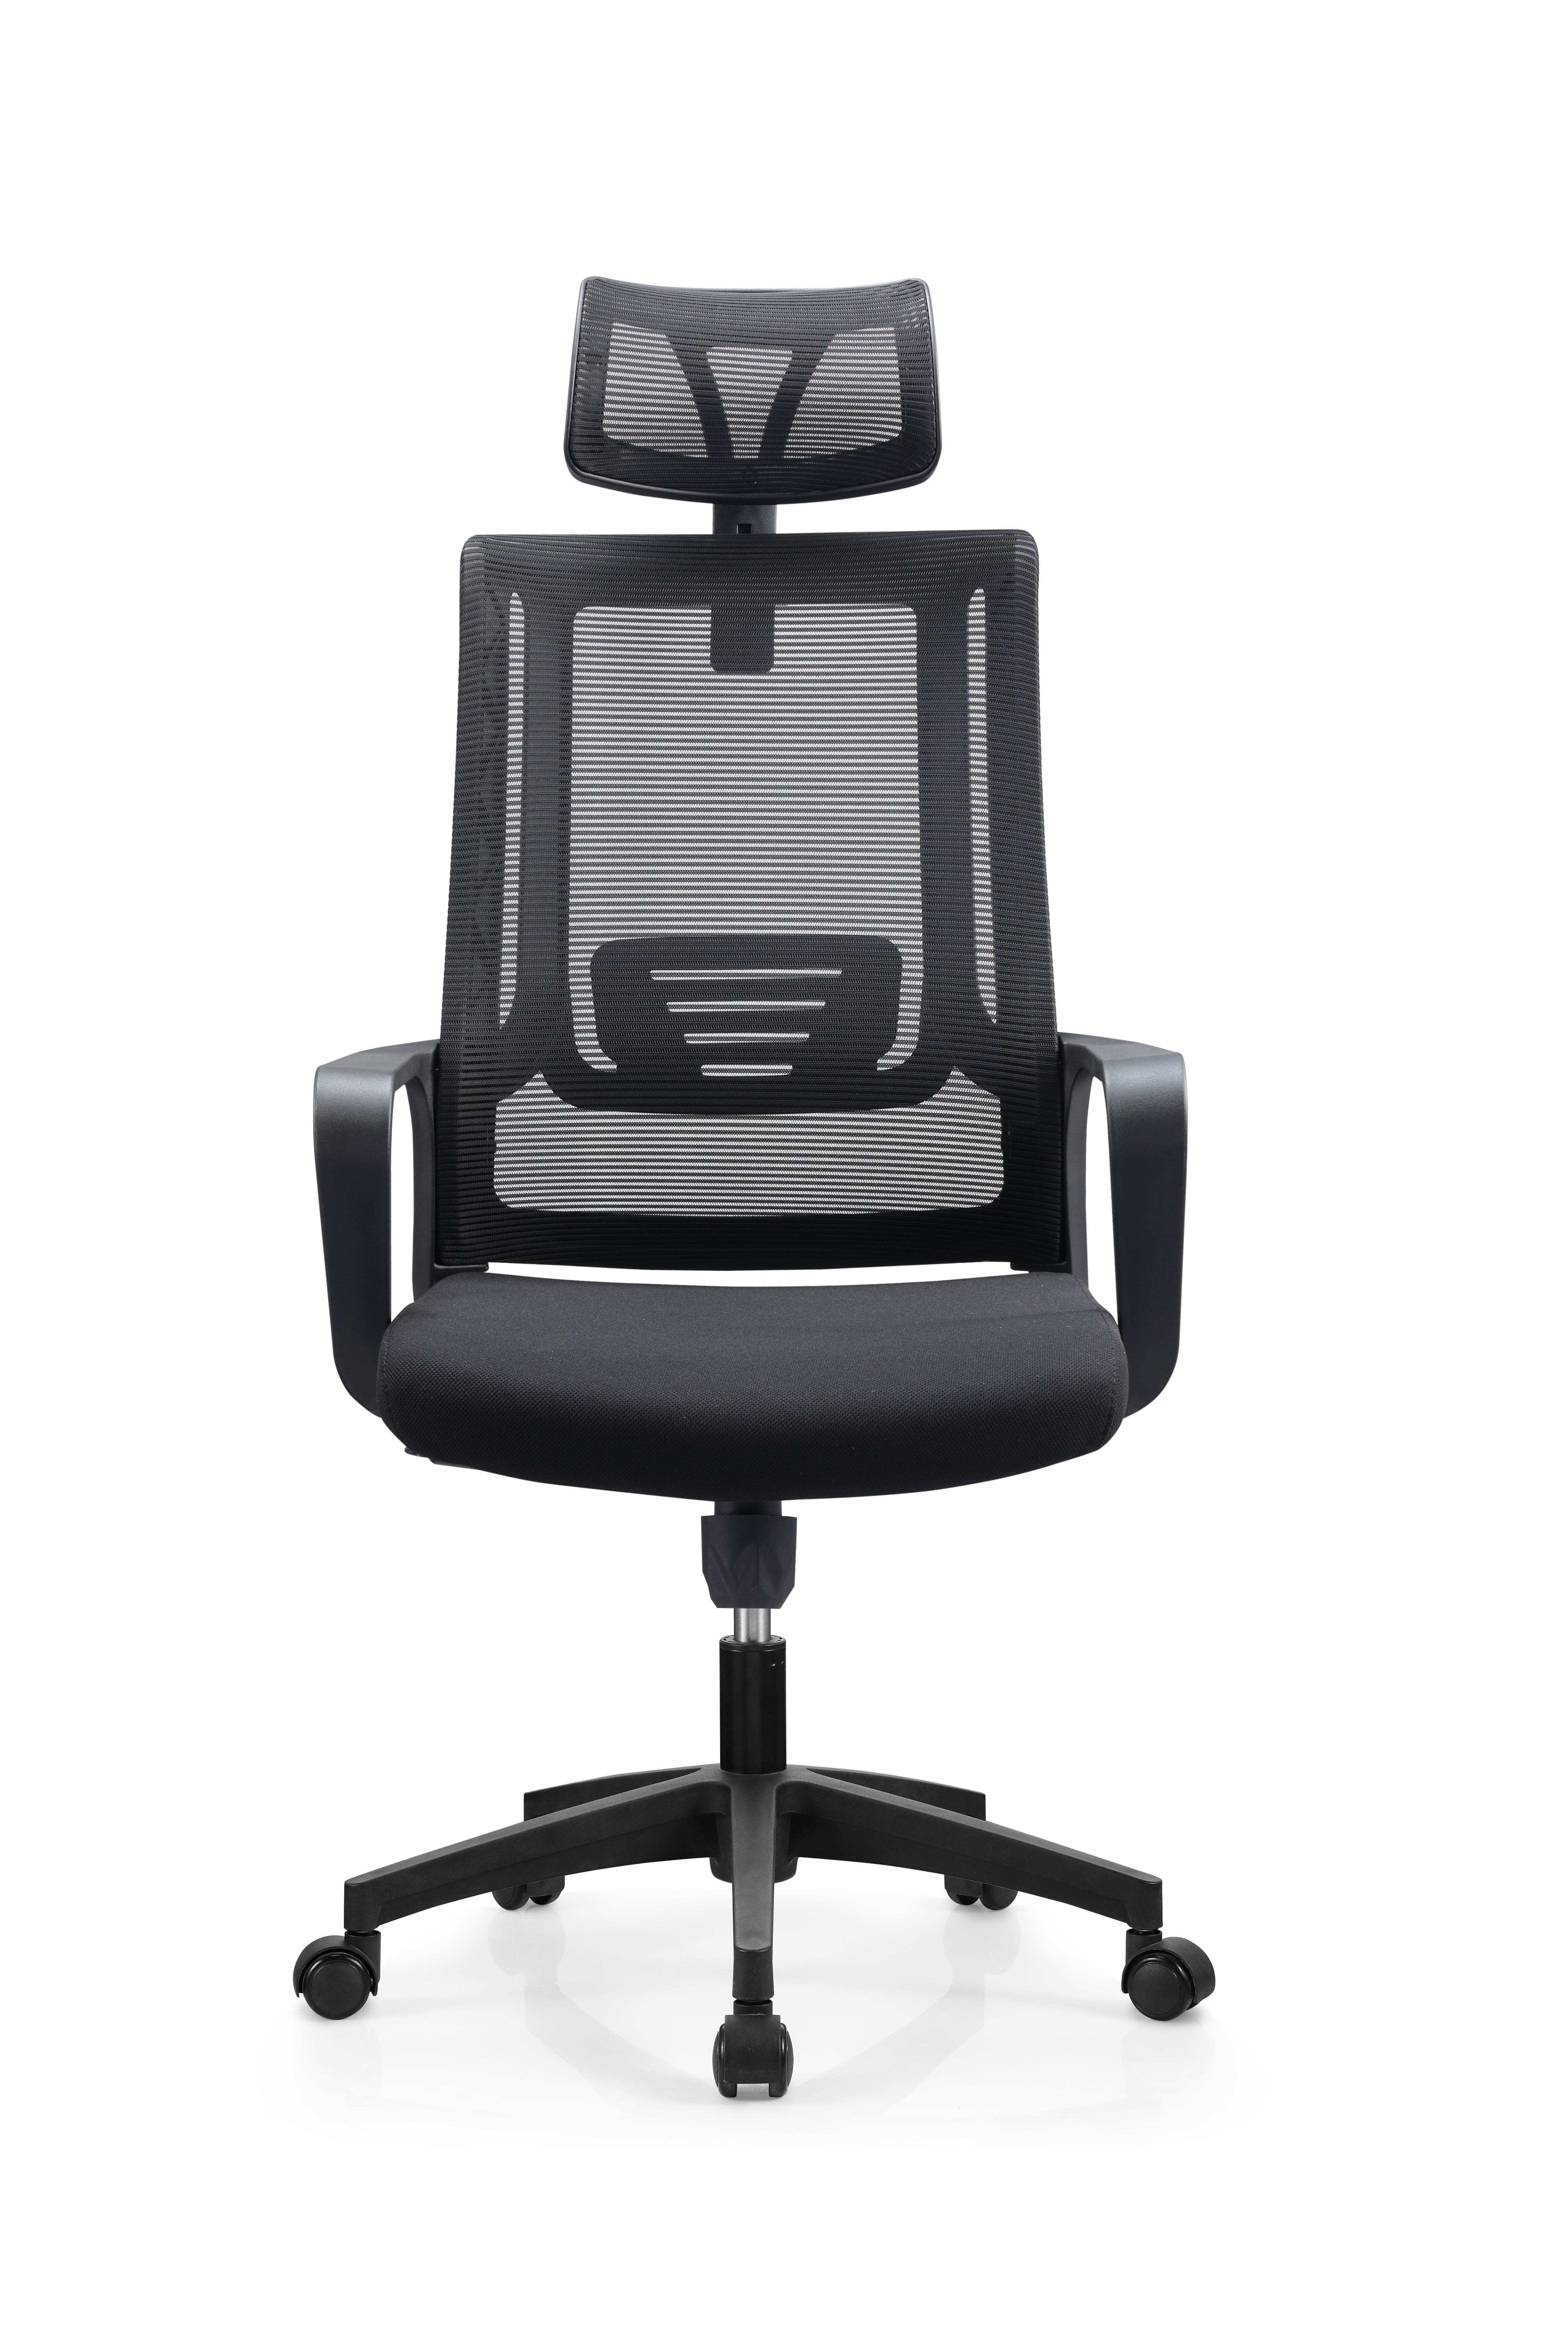 Newcity 530A مصنع البيع المباشر شبكة كرسي ضمان الجودة السعر شبكة كرسي عالية الجودة الحديثة التنفيذية شبكة كرسي بالجملة تصميم الكمبيوتر شبكة كرسي المورد فوشان الصين